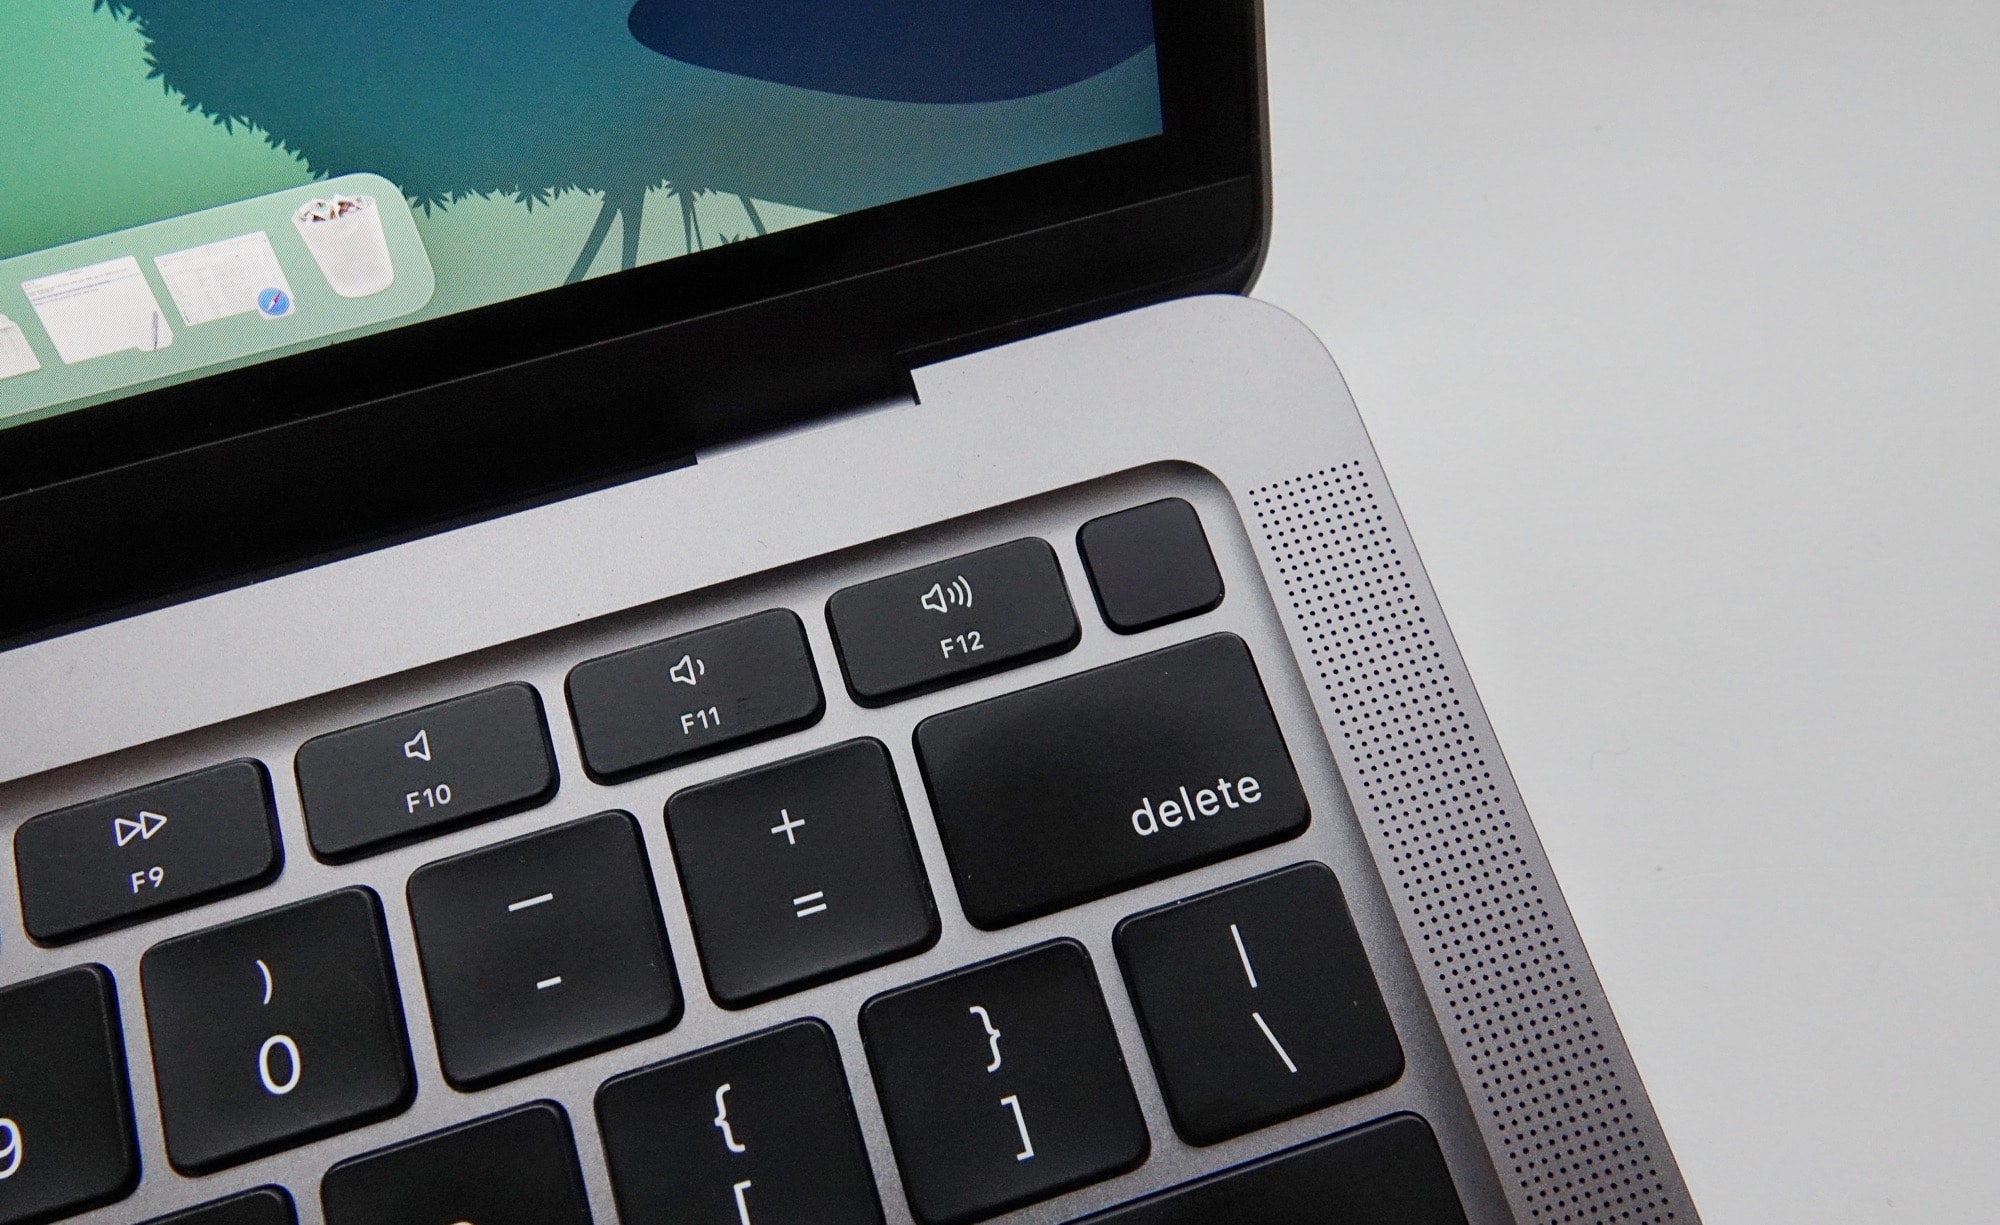 The fingerprint sensor on the M1 MacBook Air